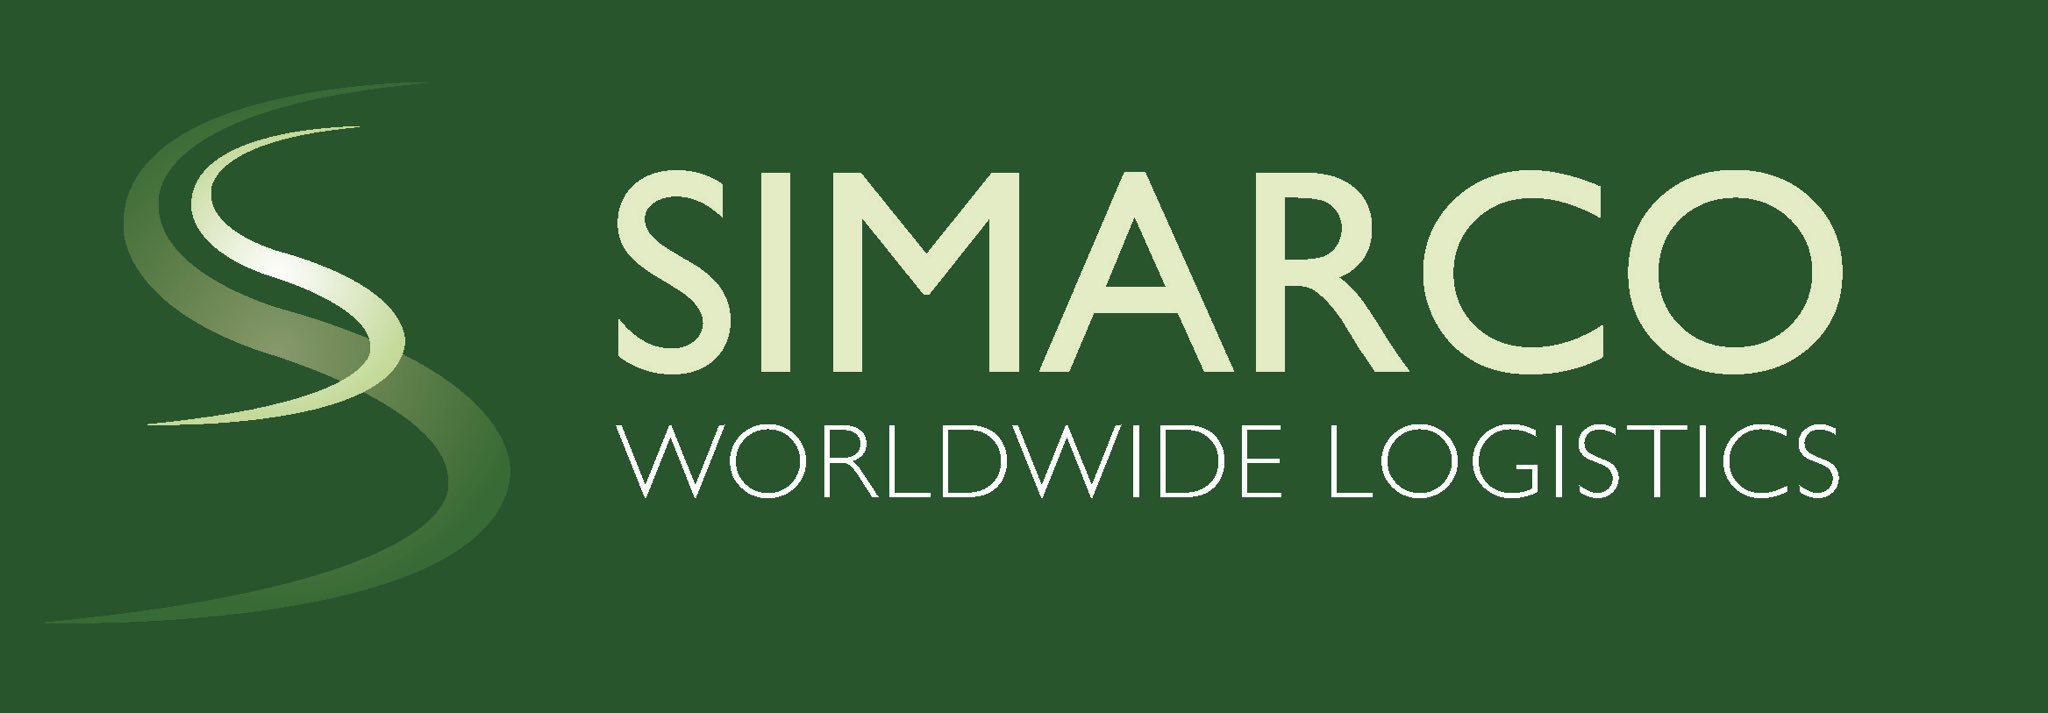 Simarco logo